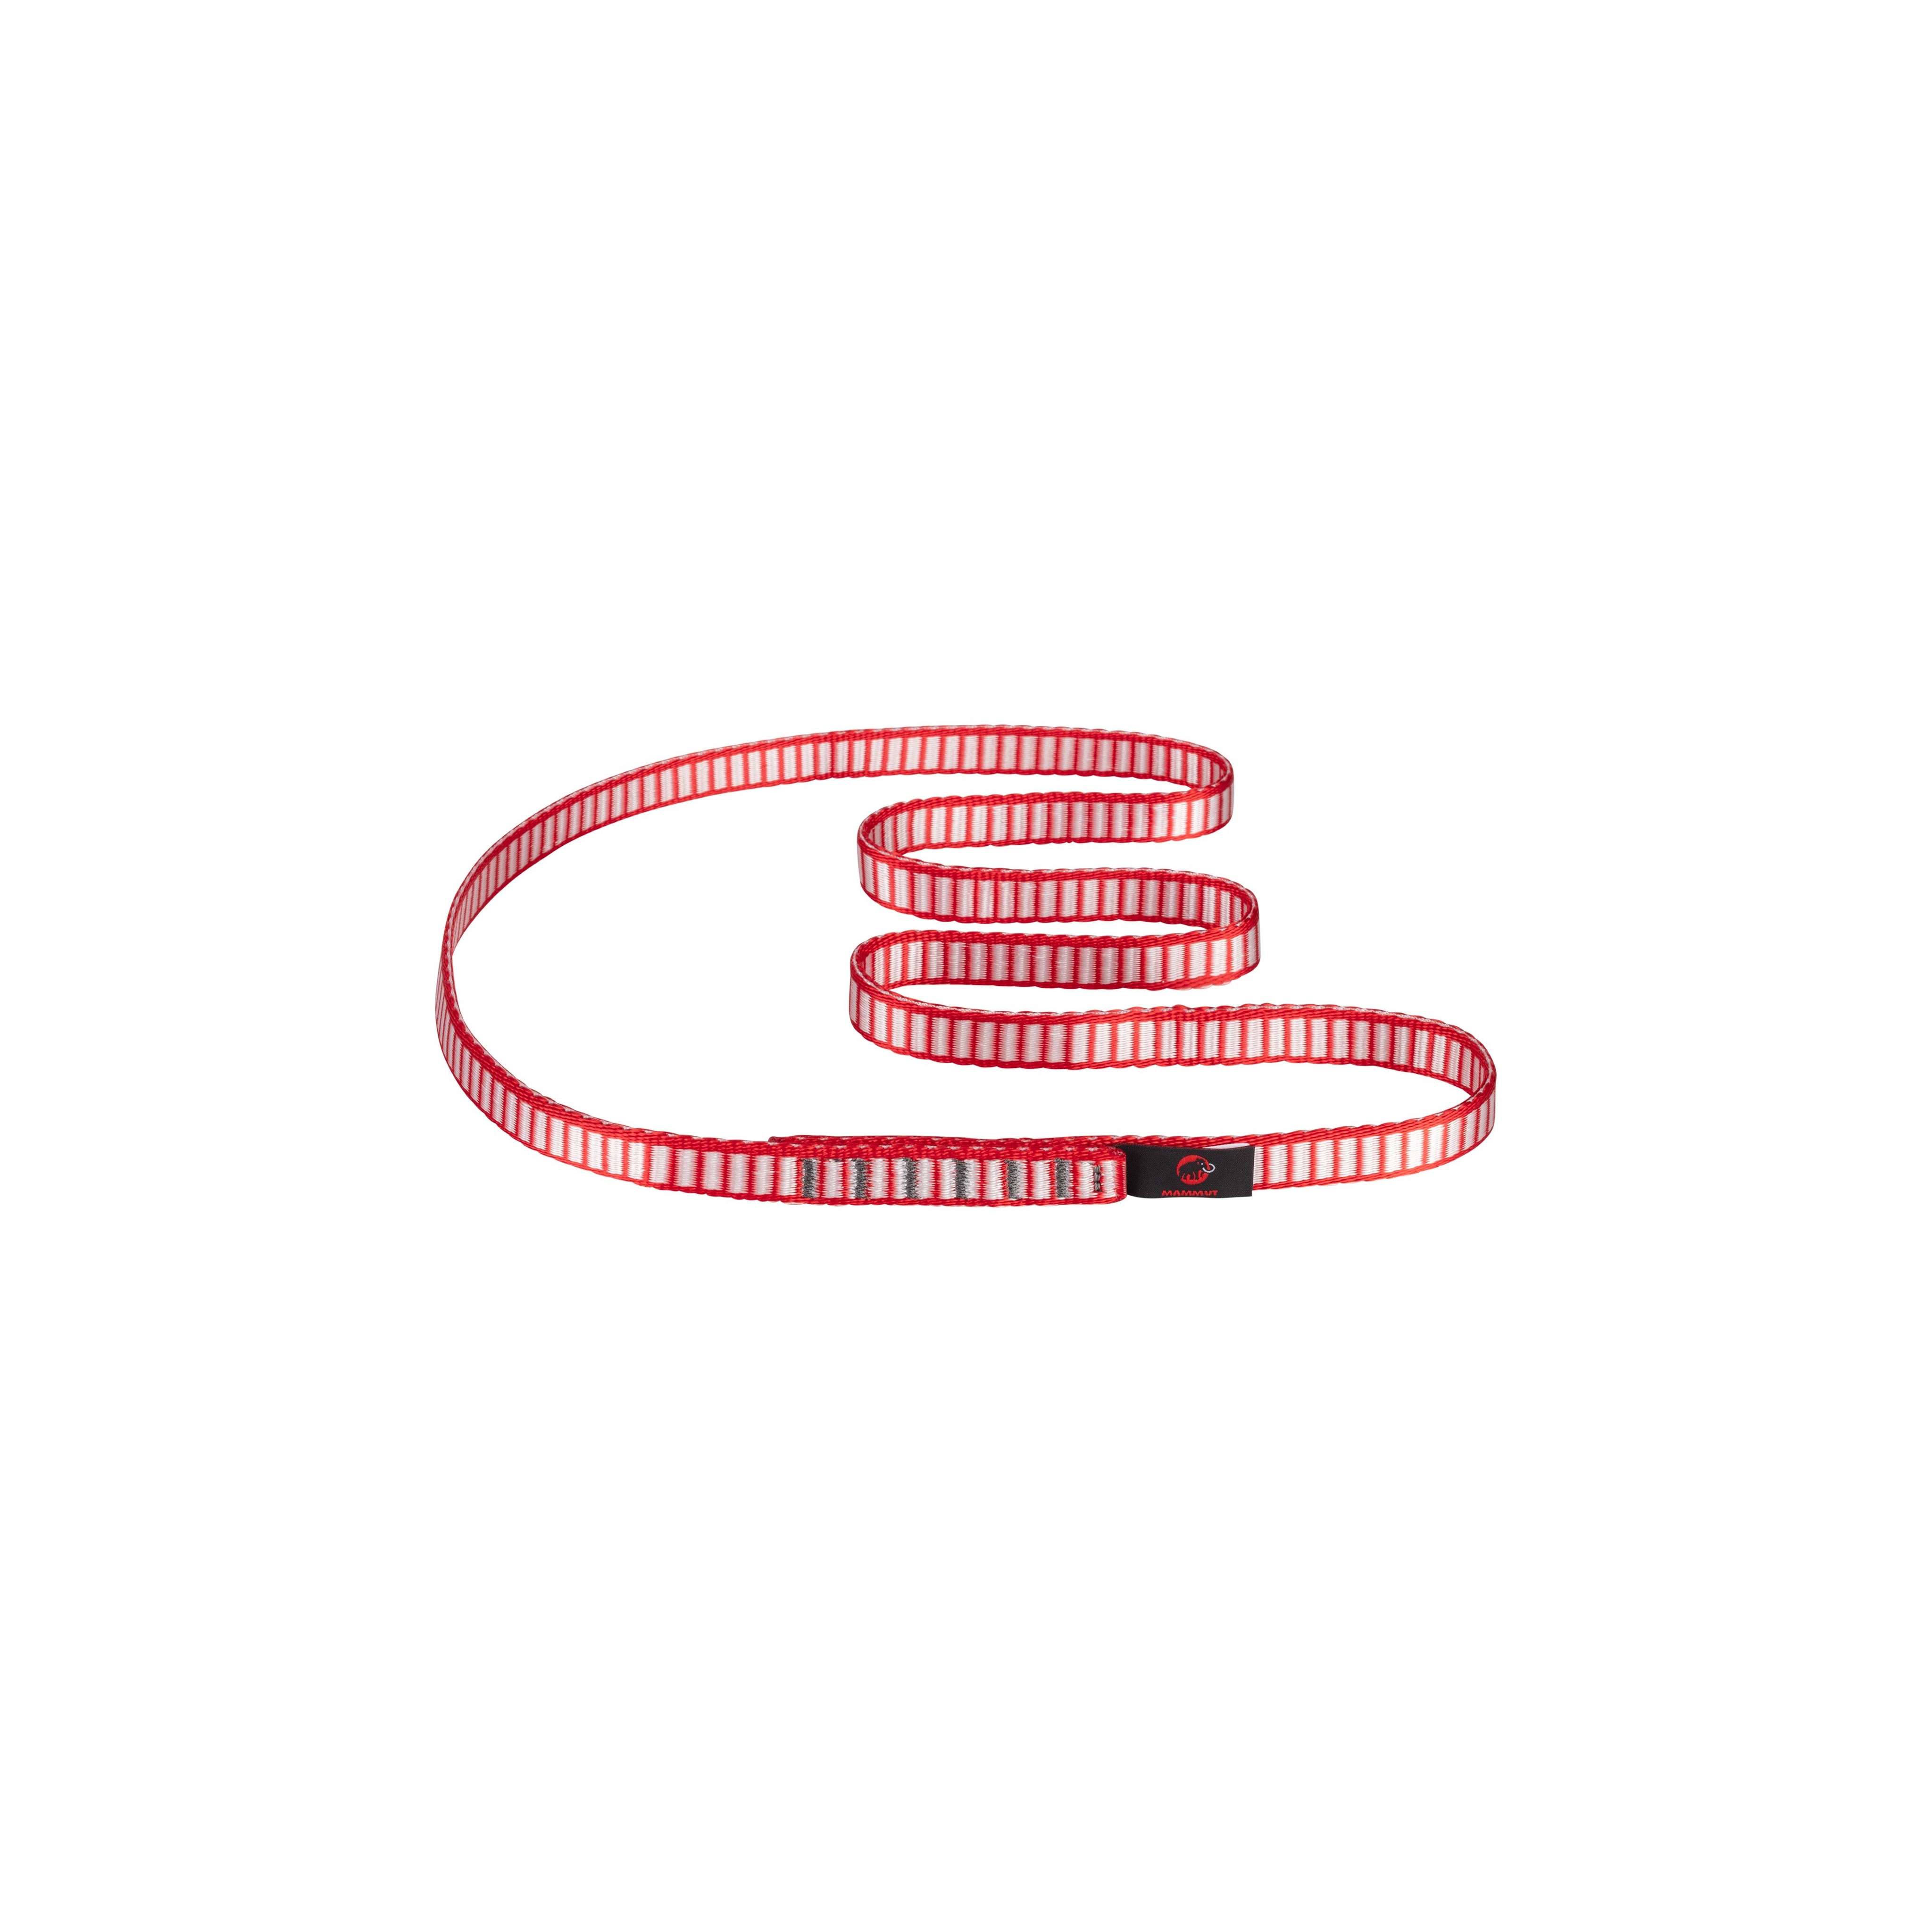 Tubular Sling 16.0 - red, 60 cm product image